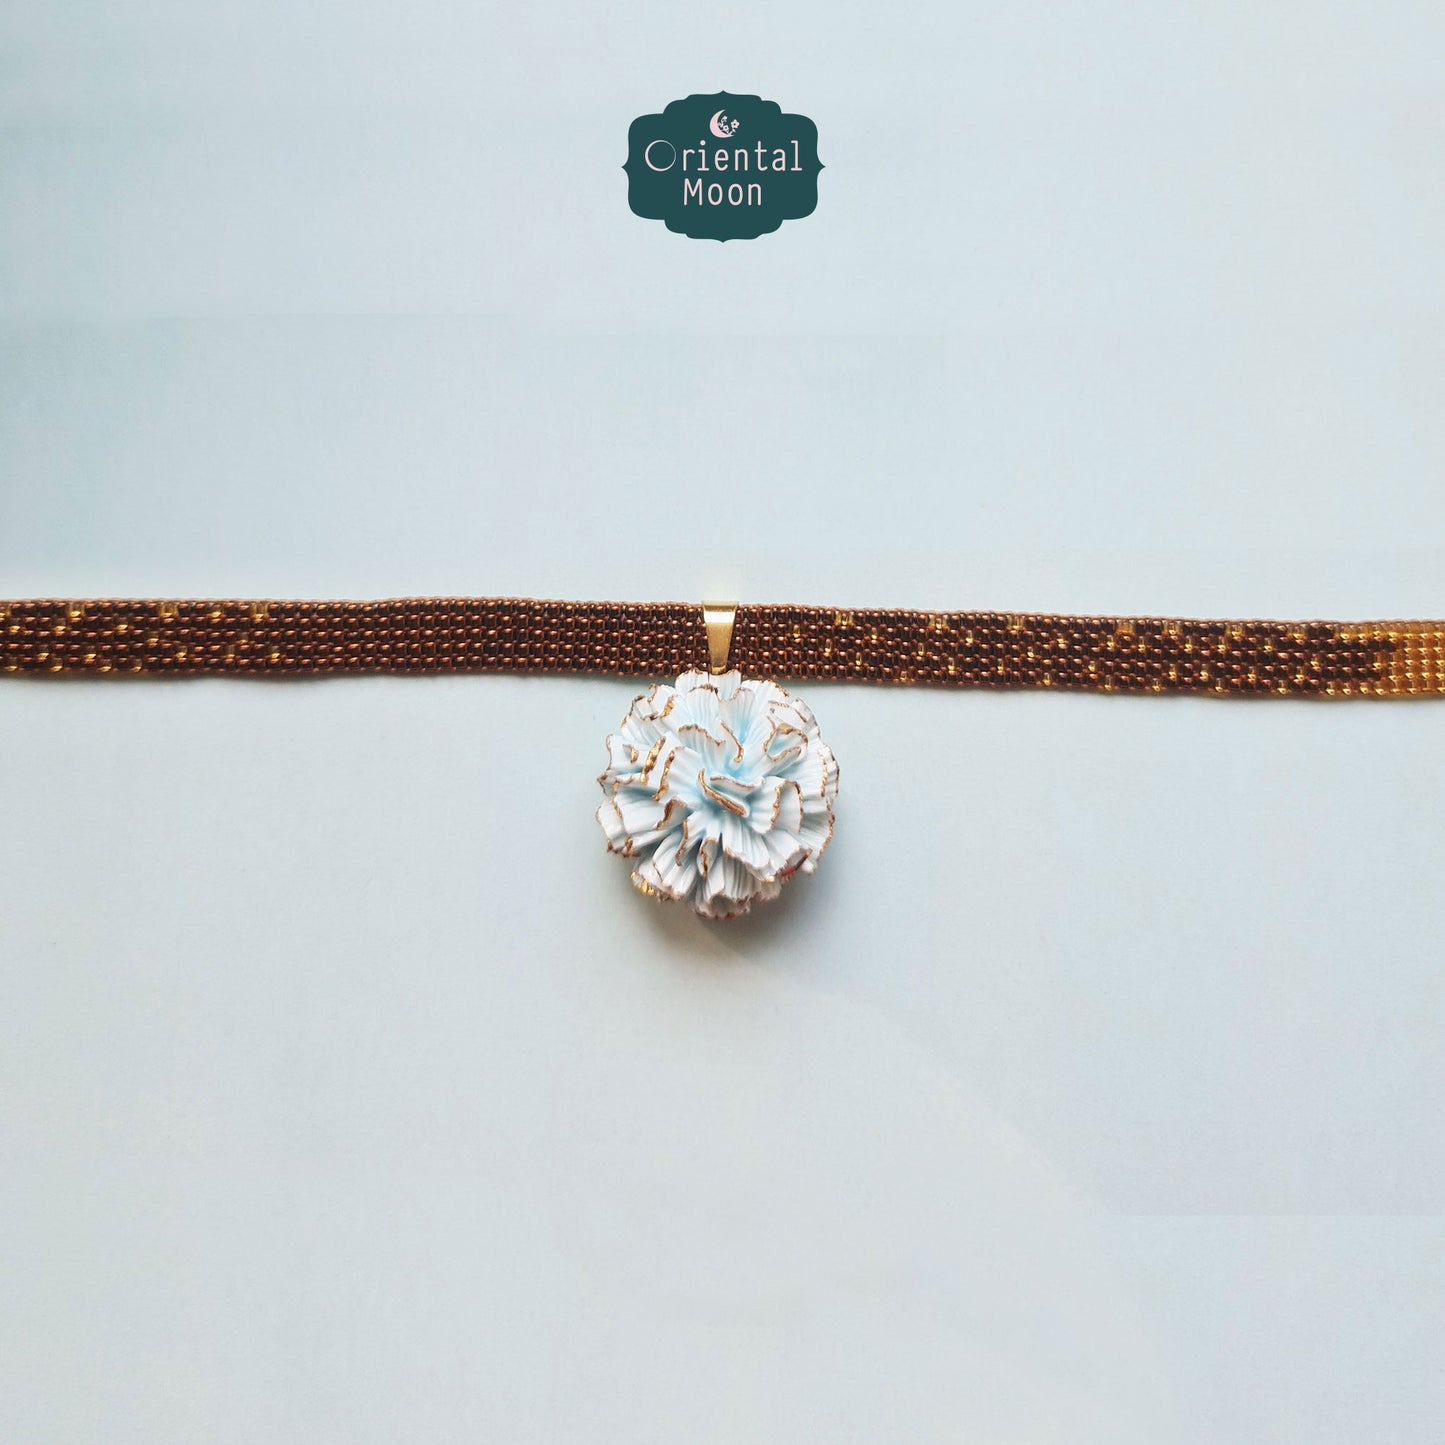 Dok Carnation Porcelain pendant with beads chocker